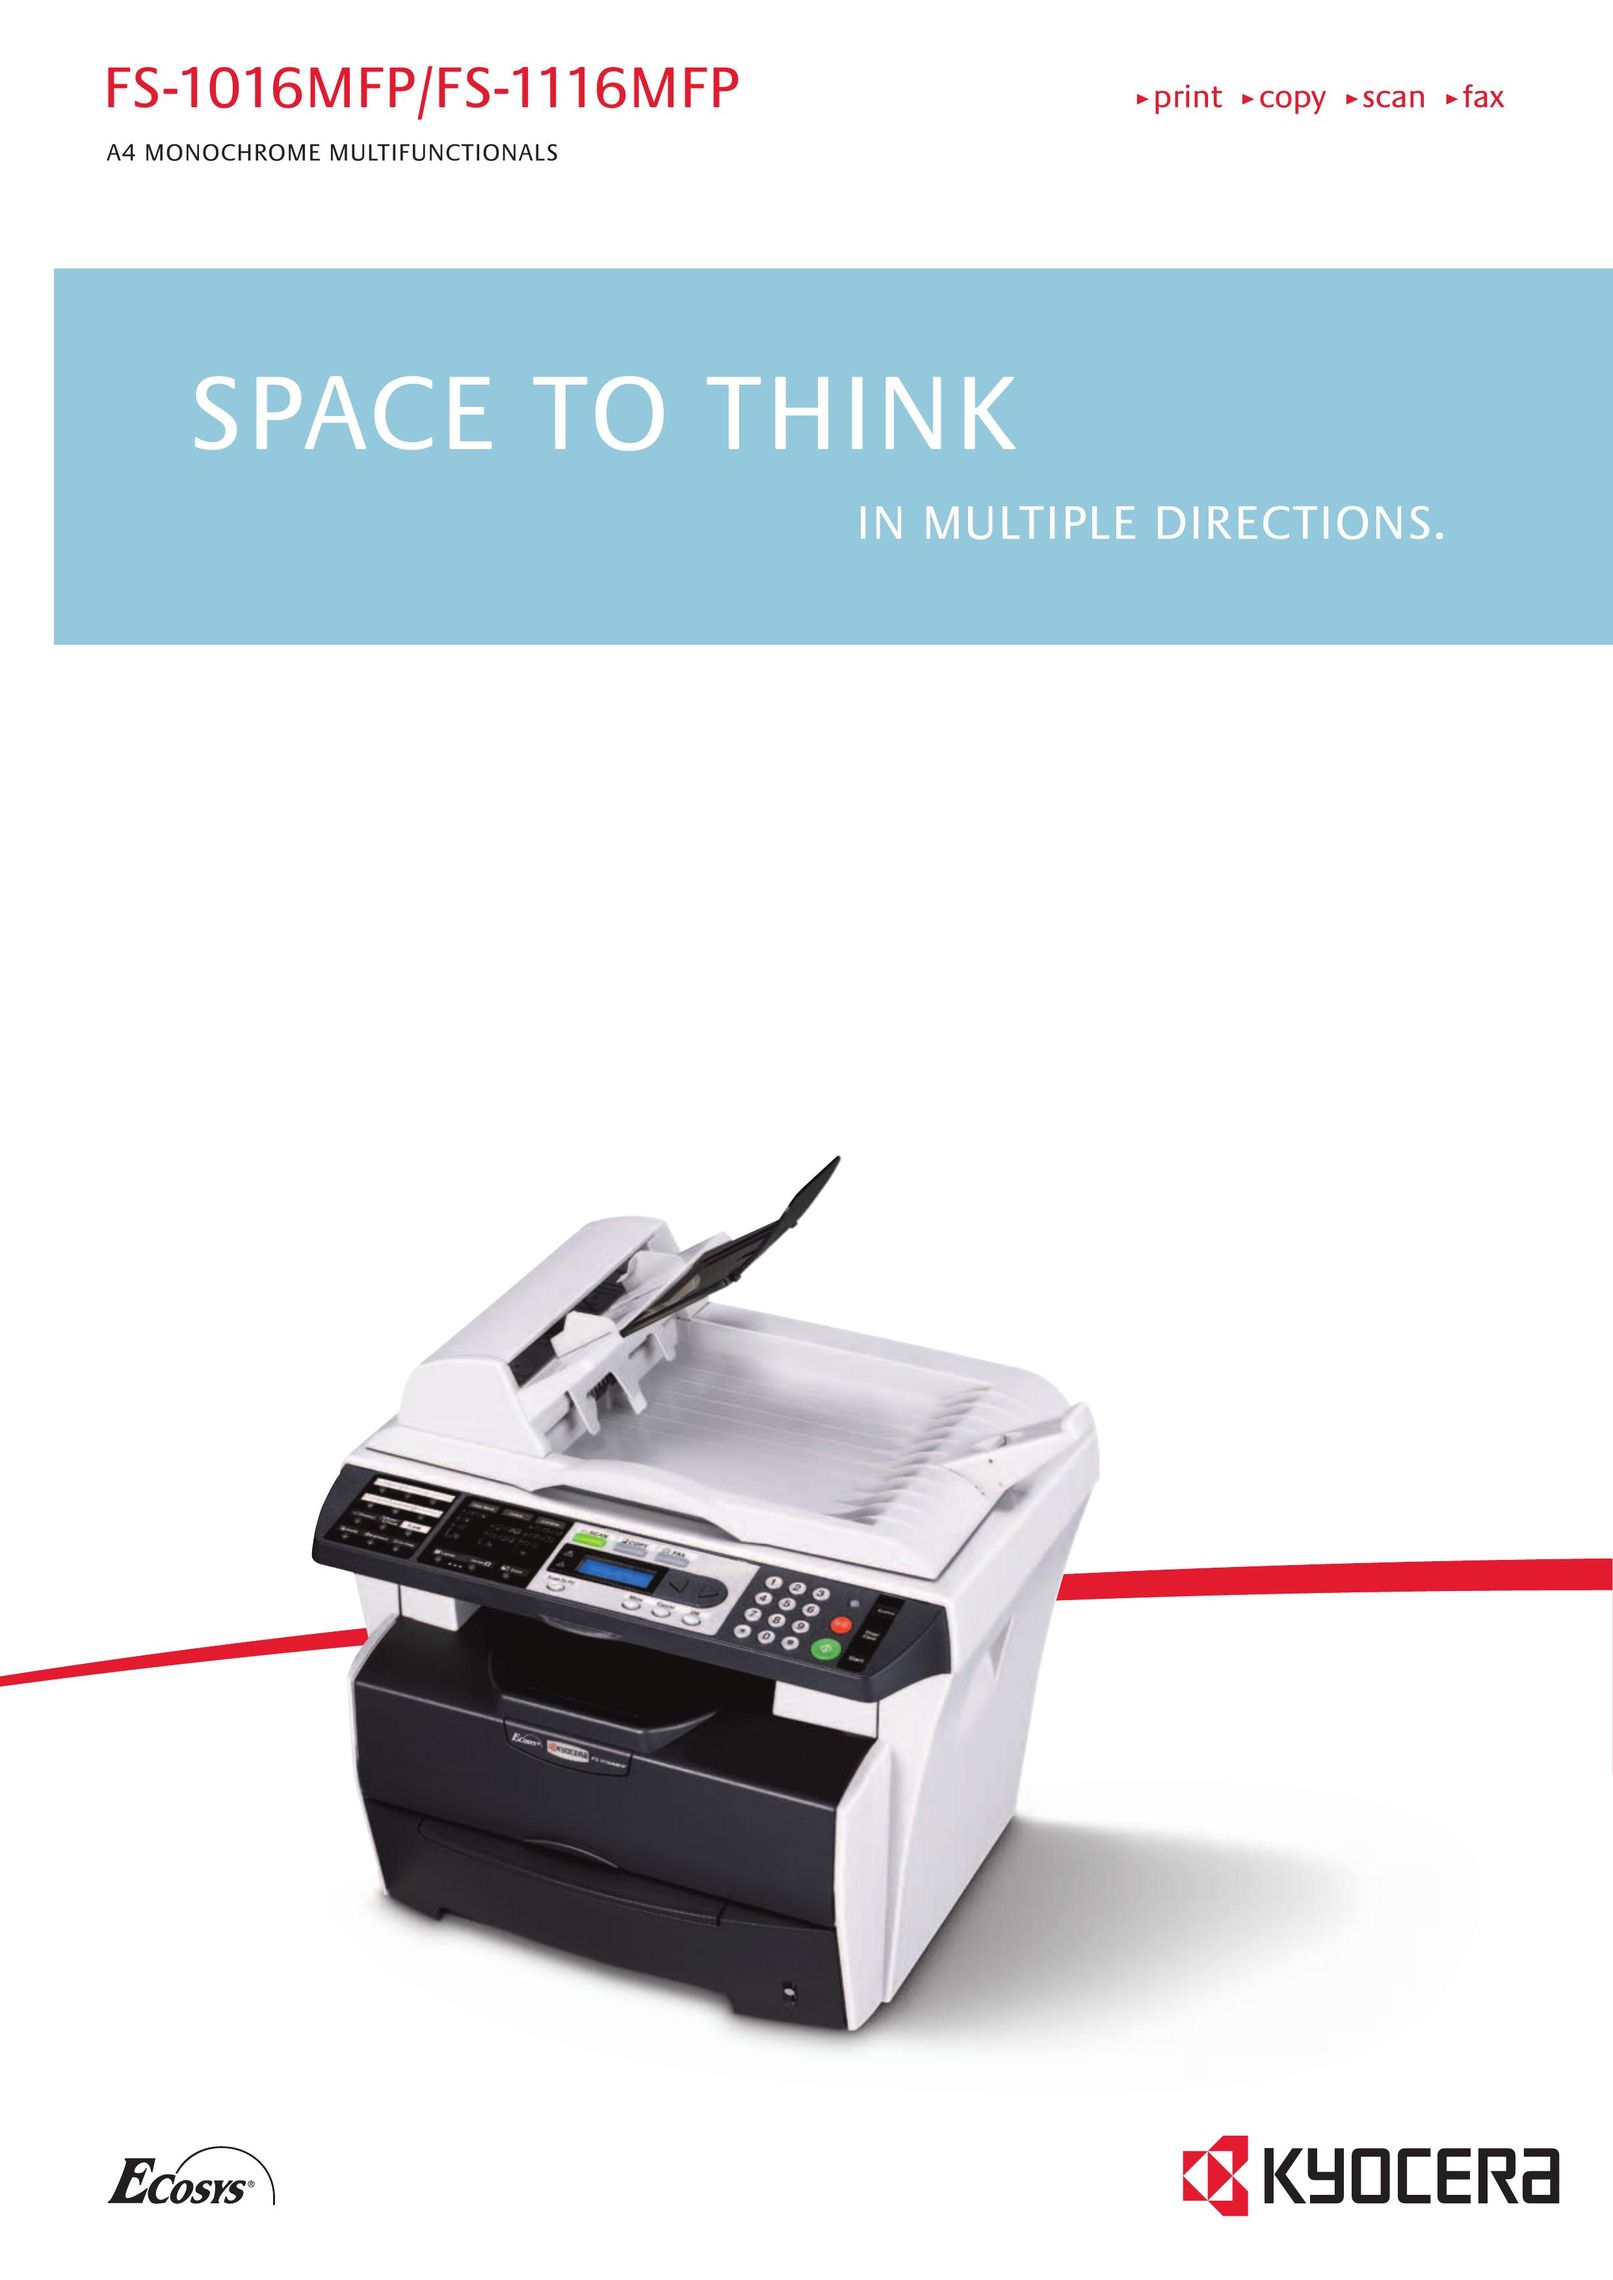 Kyocera FS-1116MFP Printer User Manual